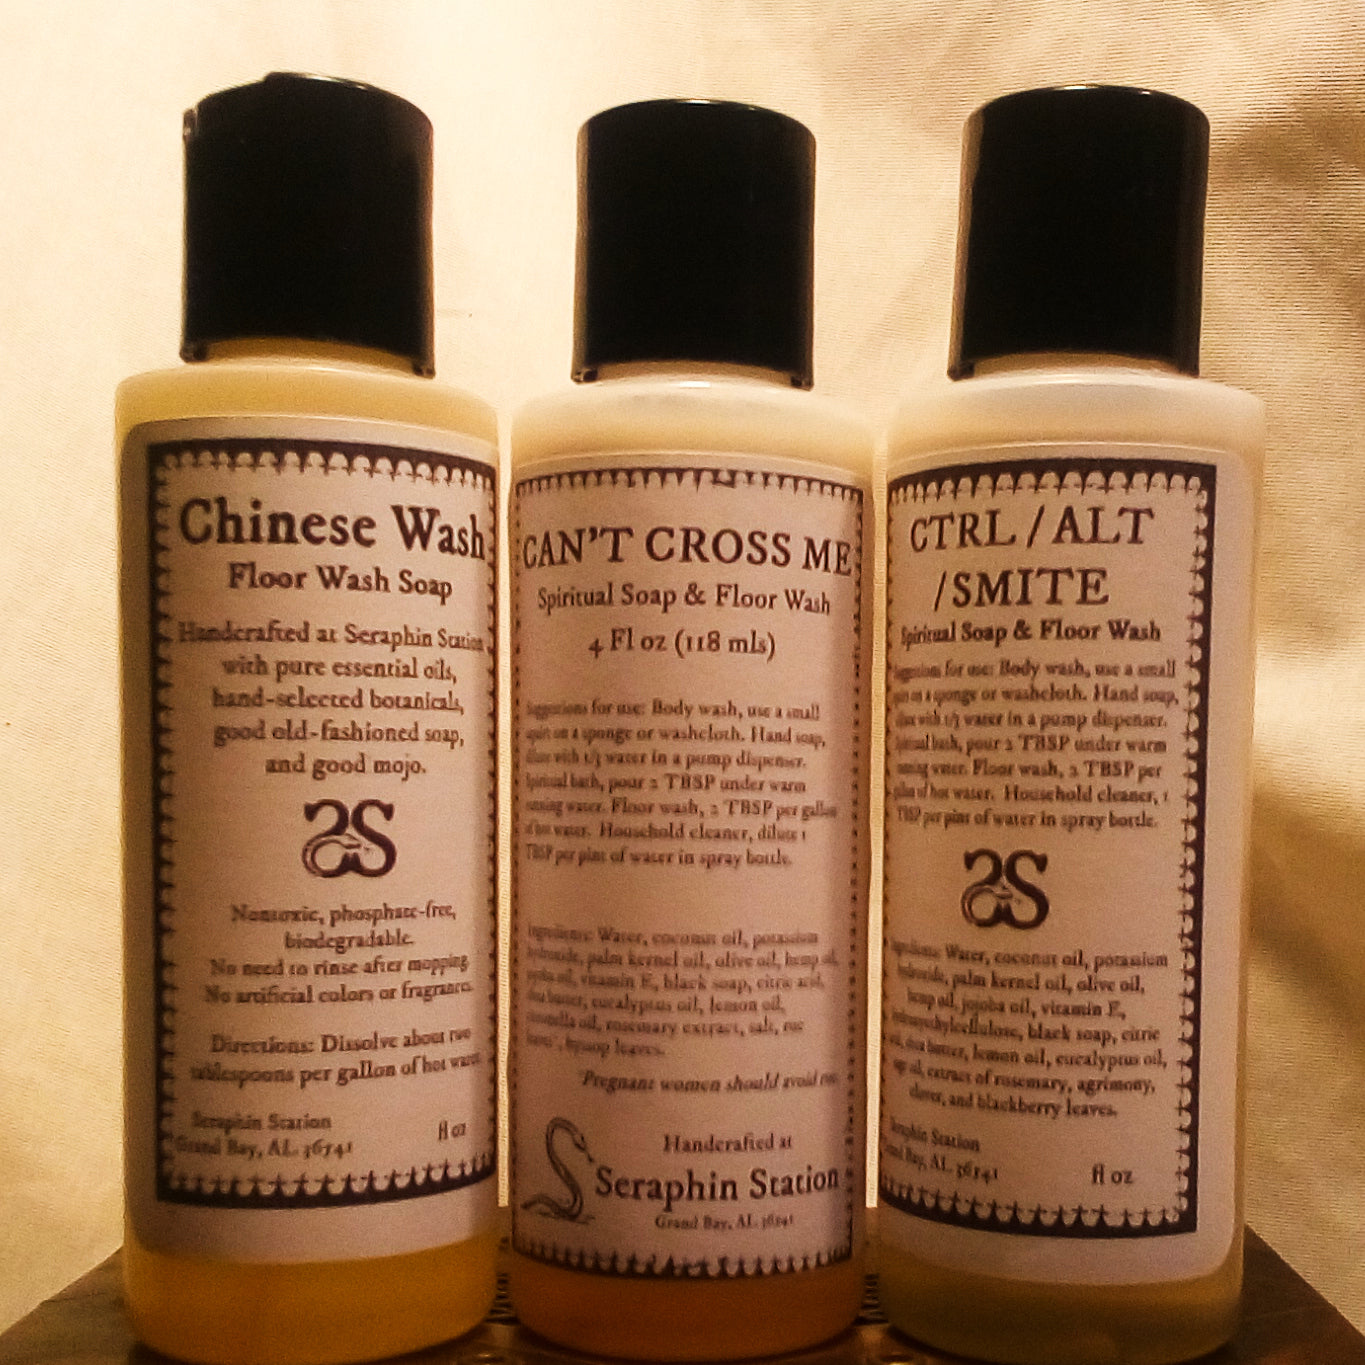 CTRL/ALT/SMITE Spiritual Soap & Floor Wash